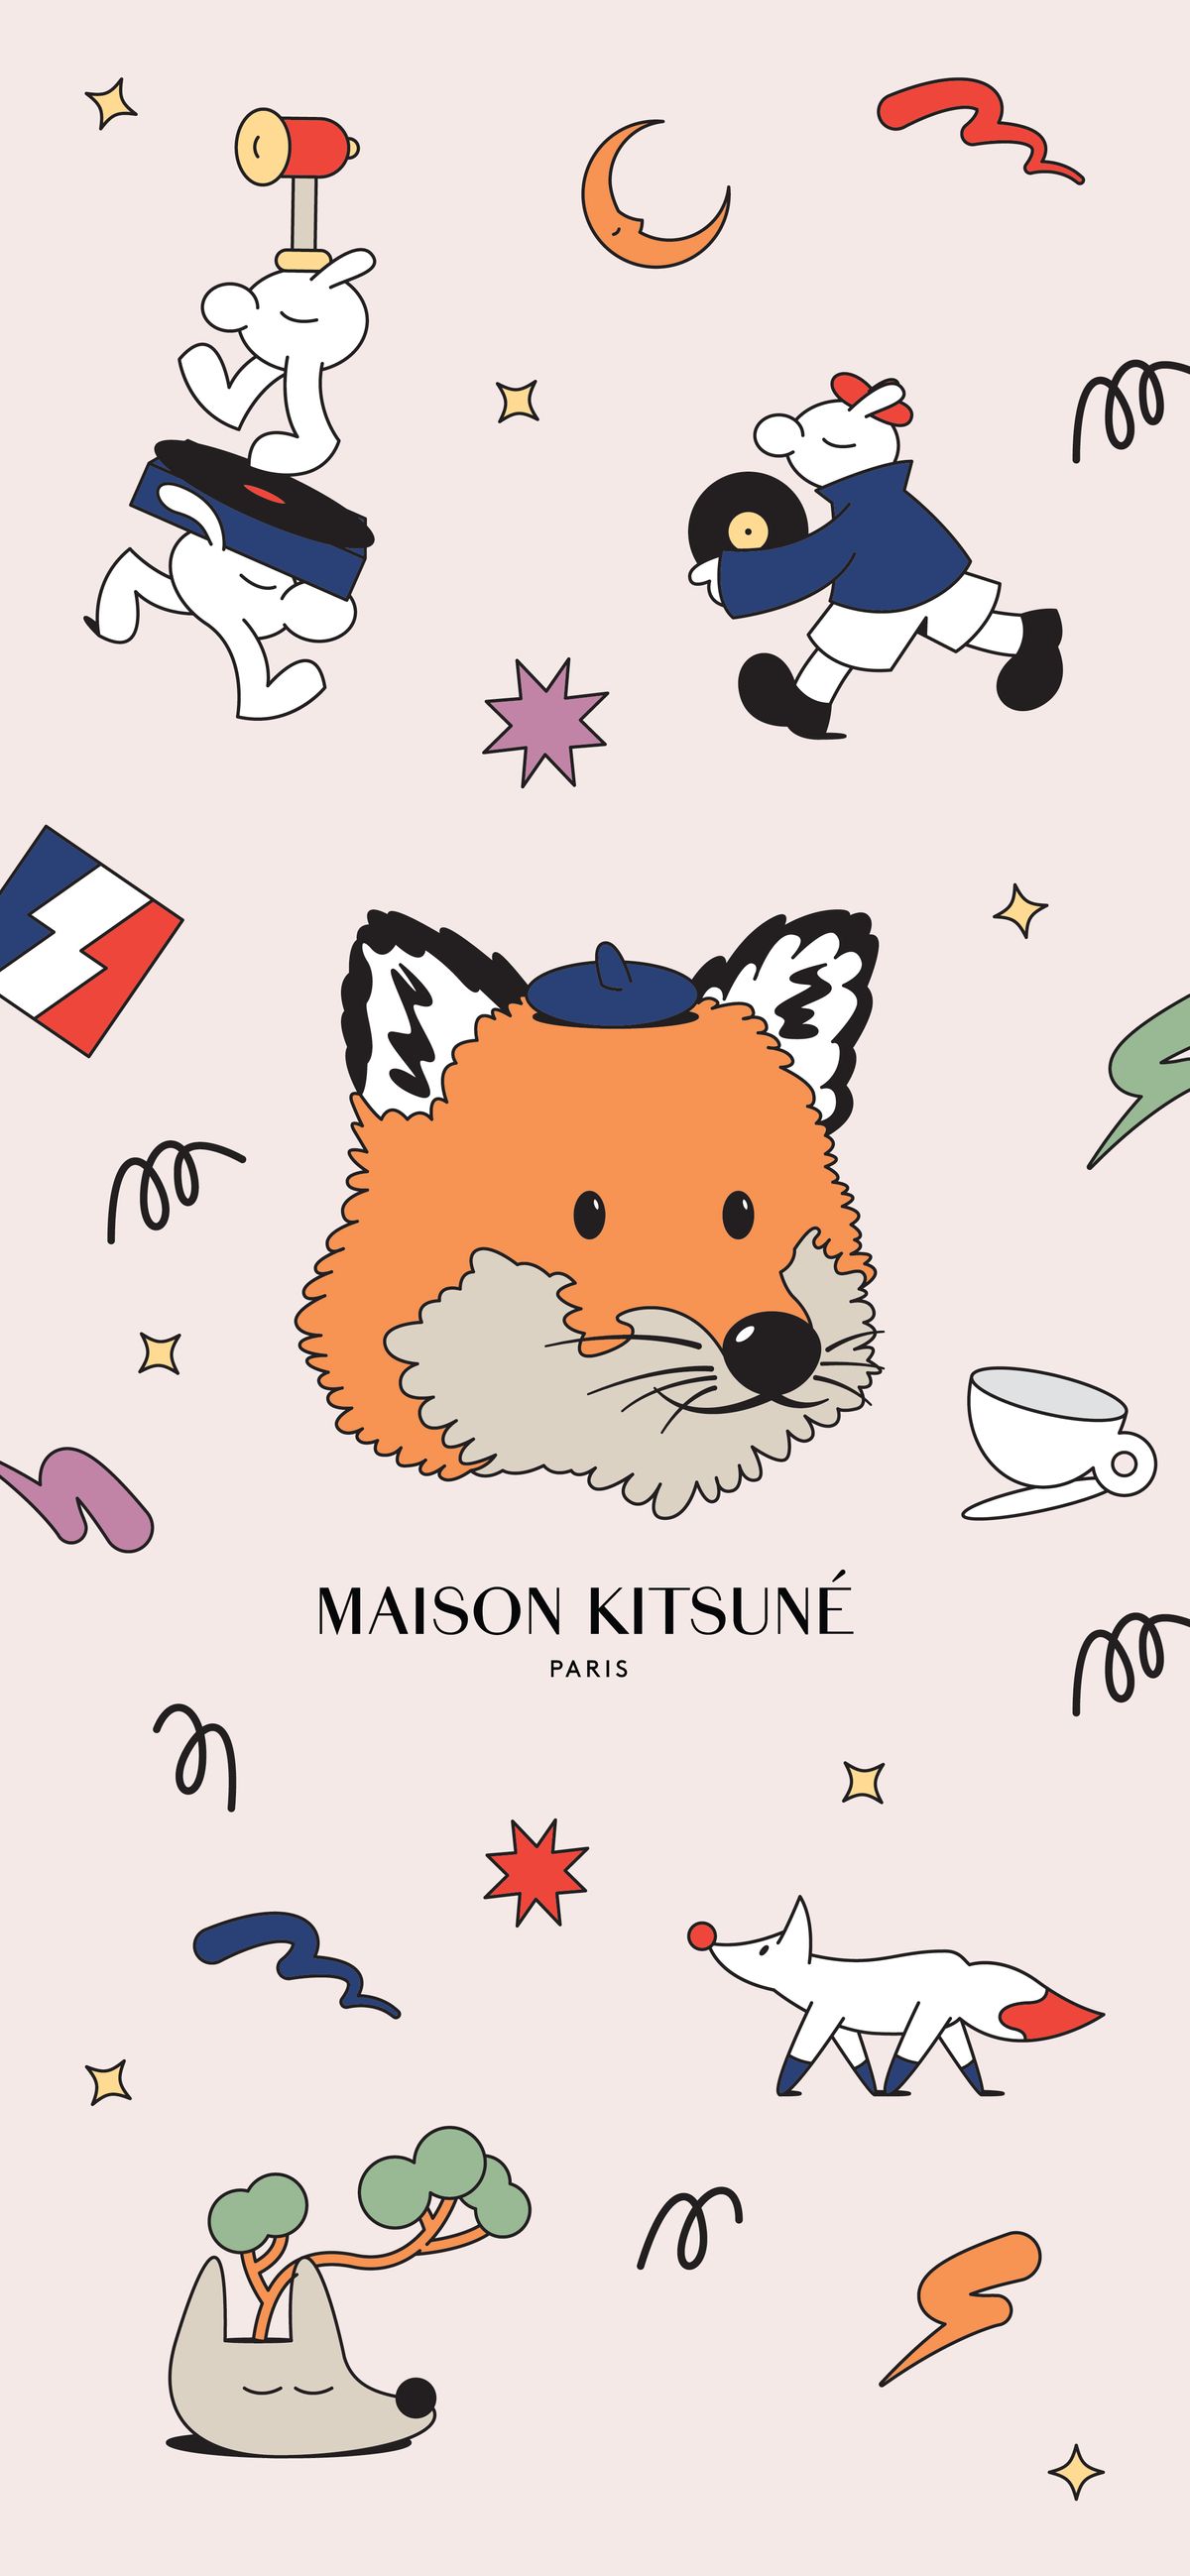 Maison Kitsune แจกวอลเปเปอร ส ดน าร กฟร มกราคม 22 Sale Here